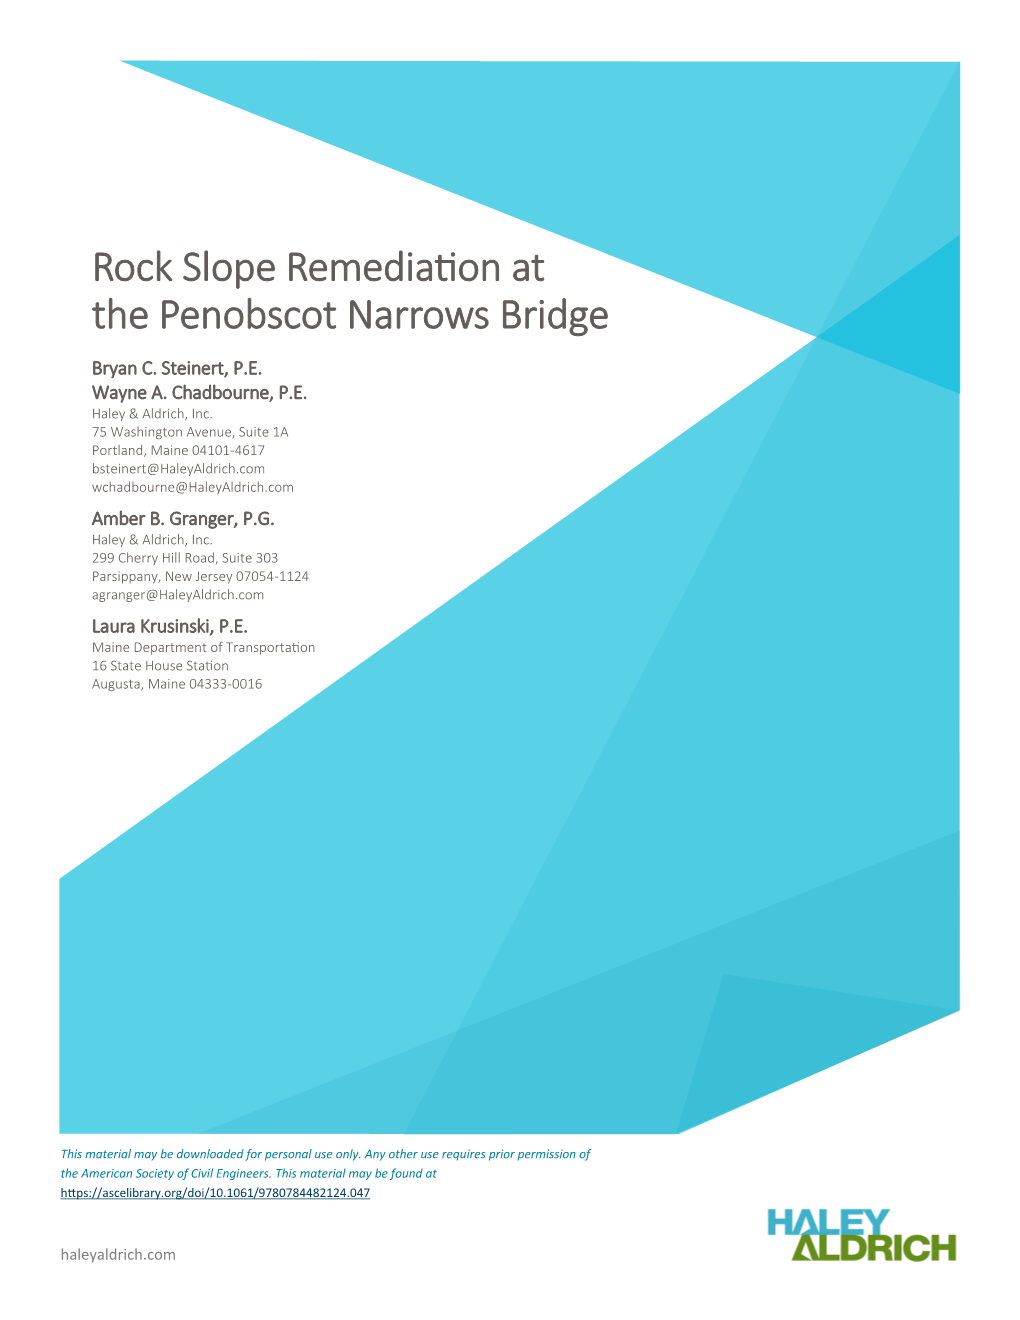 Rock Slope Remediation at the Penobscot Narrows Bridge